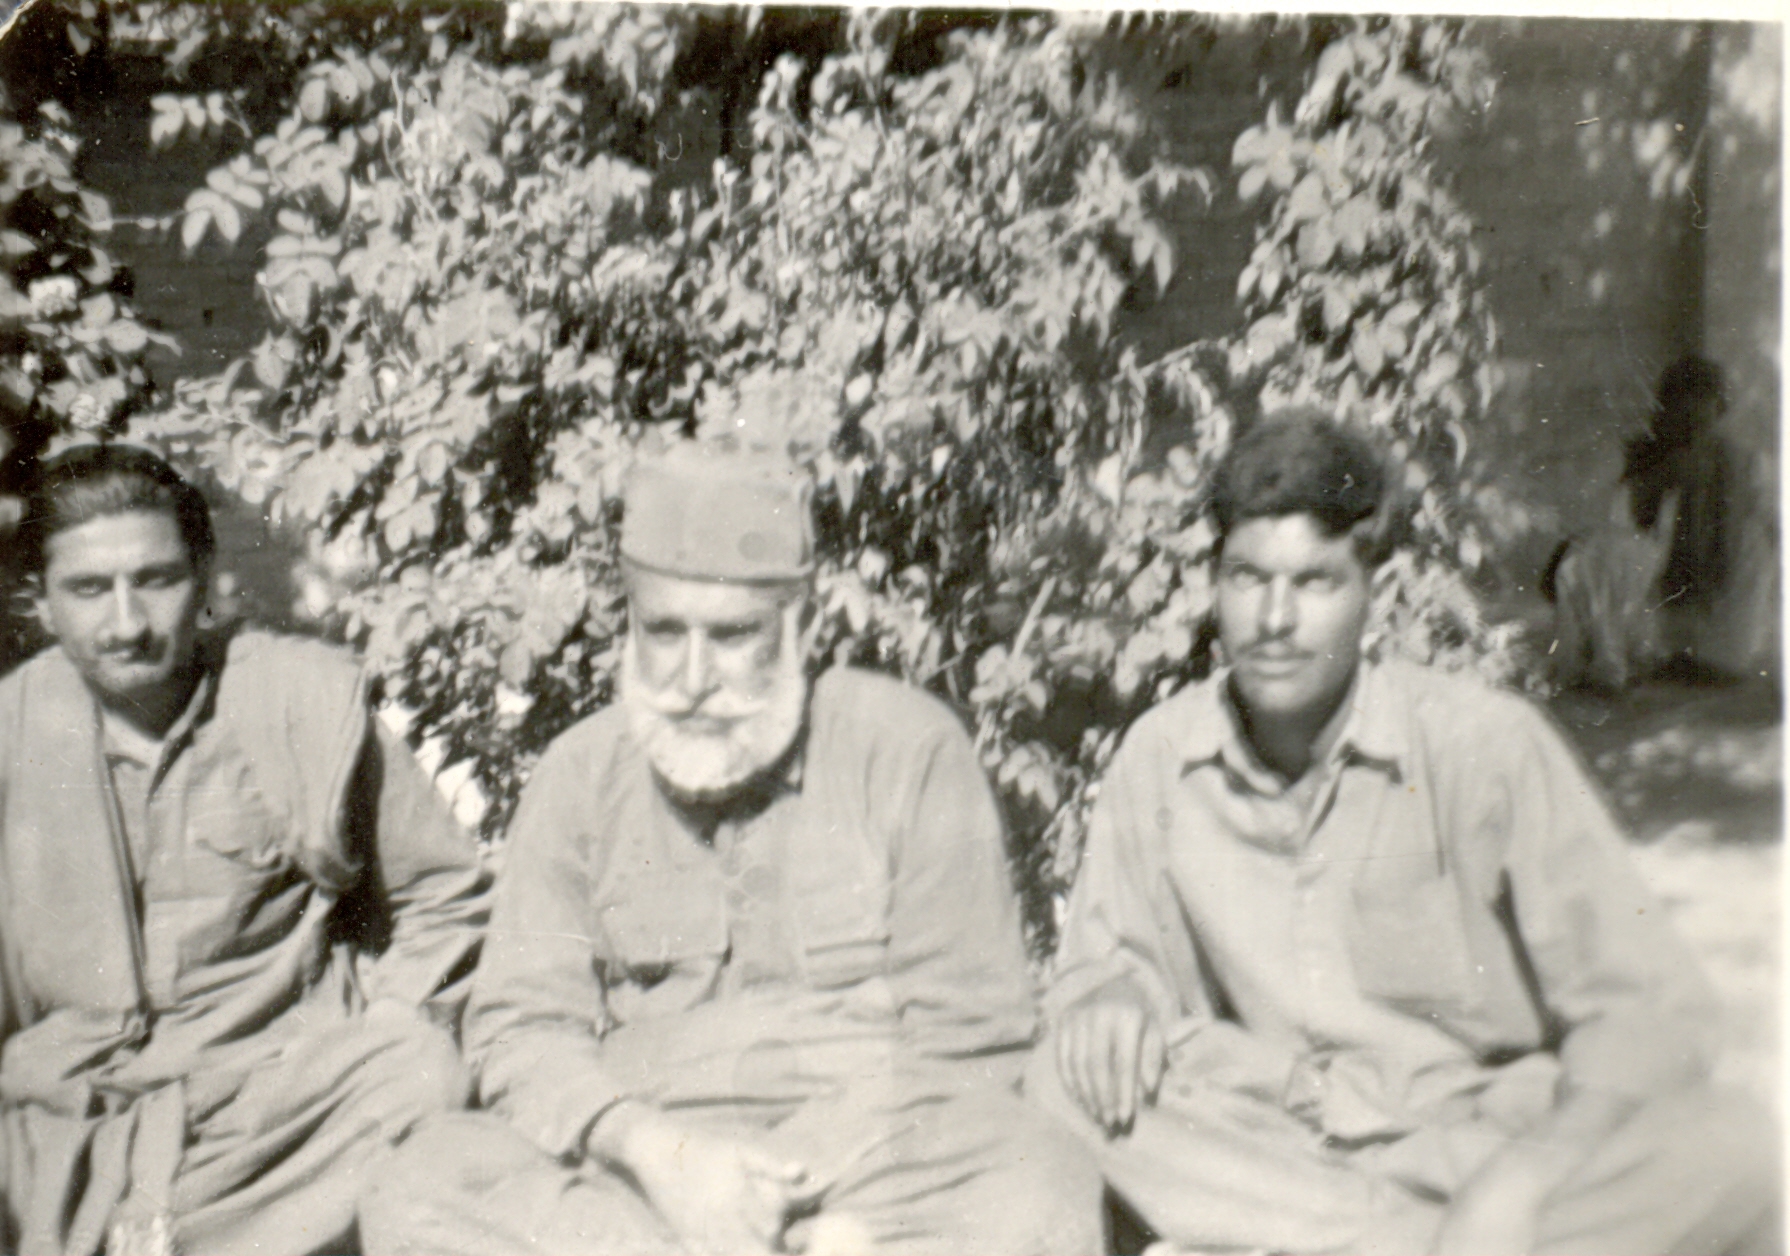 three men in uniforms sitting next to each other